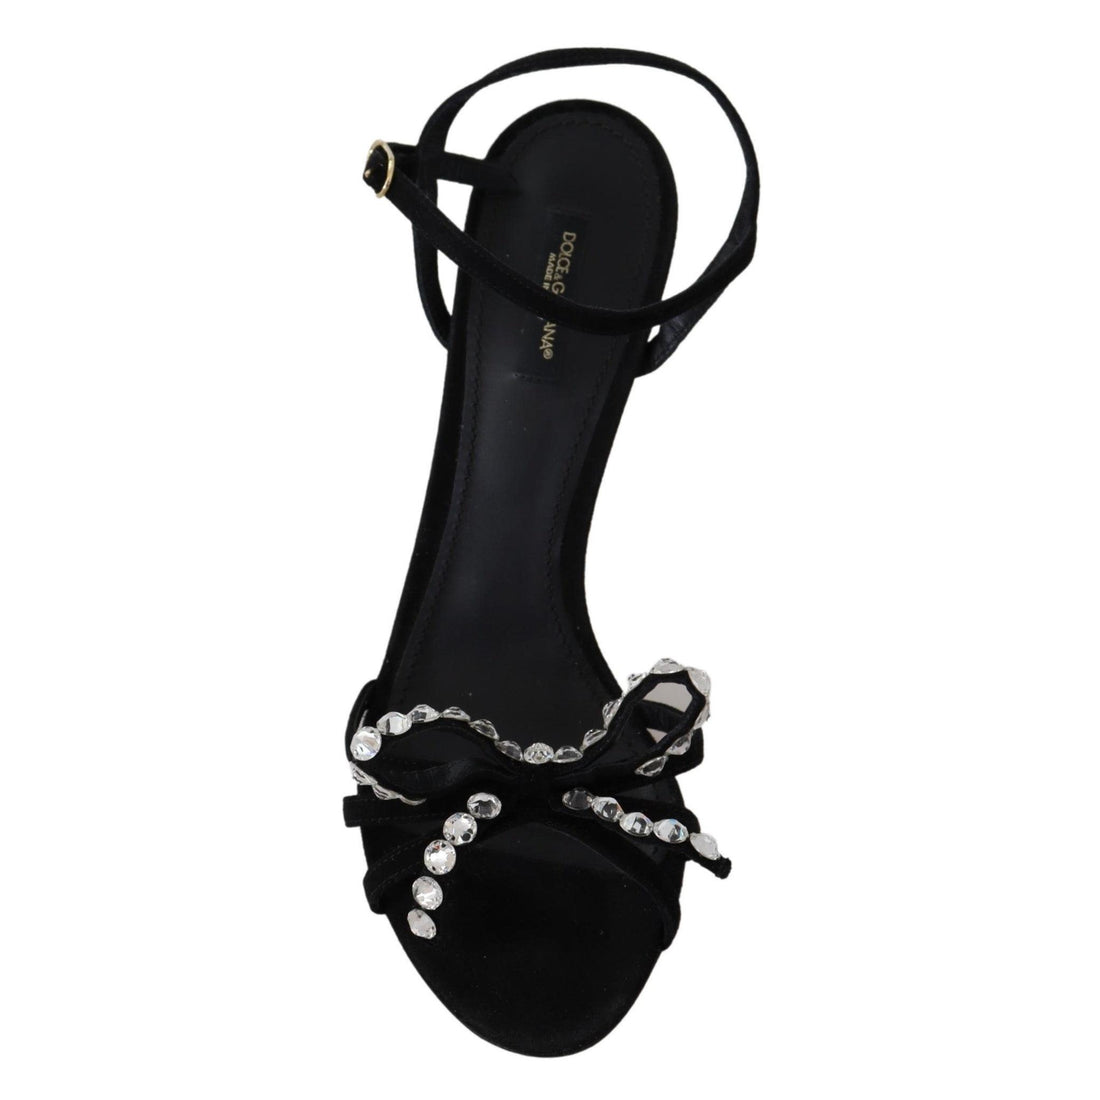 Dolce & Gabbana Black Suede Crystals Heels Sandals Shoes